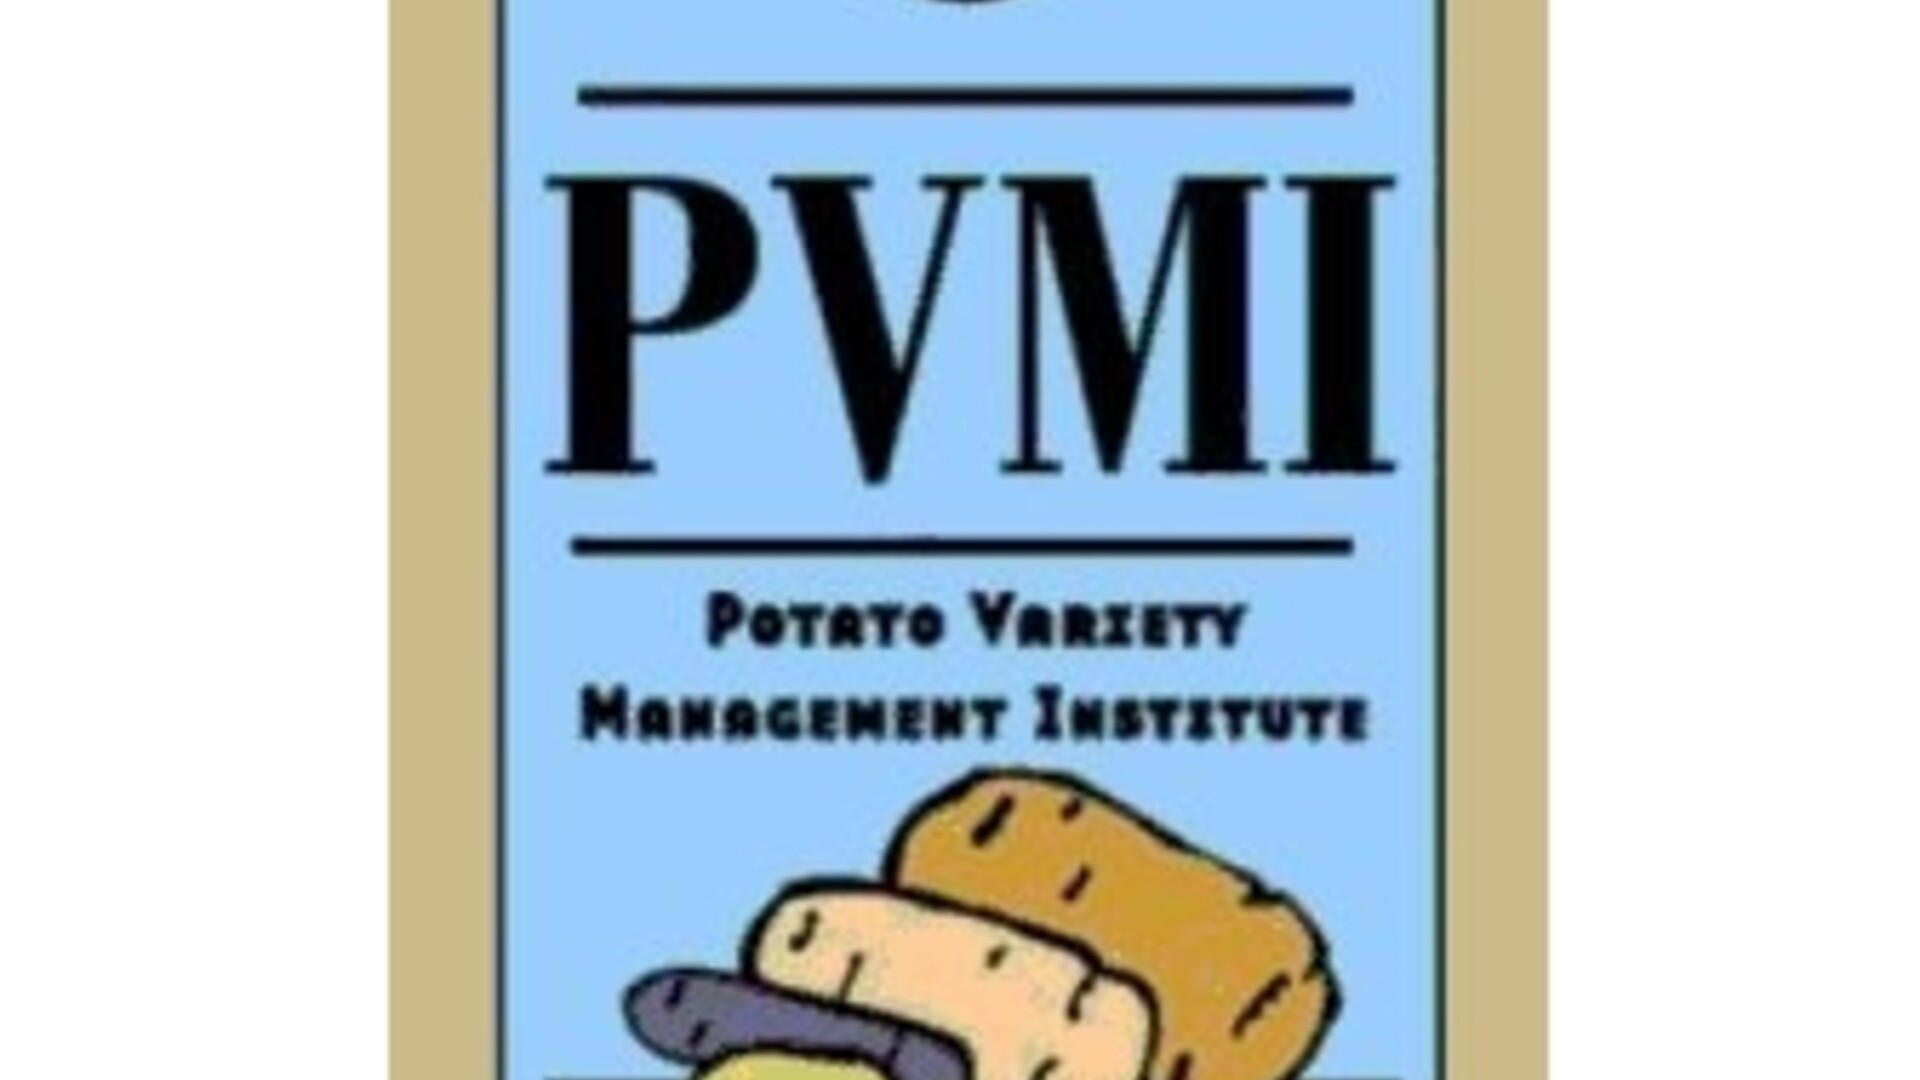 PVMI Working on Potato Varieties Pt 2